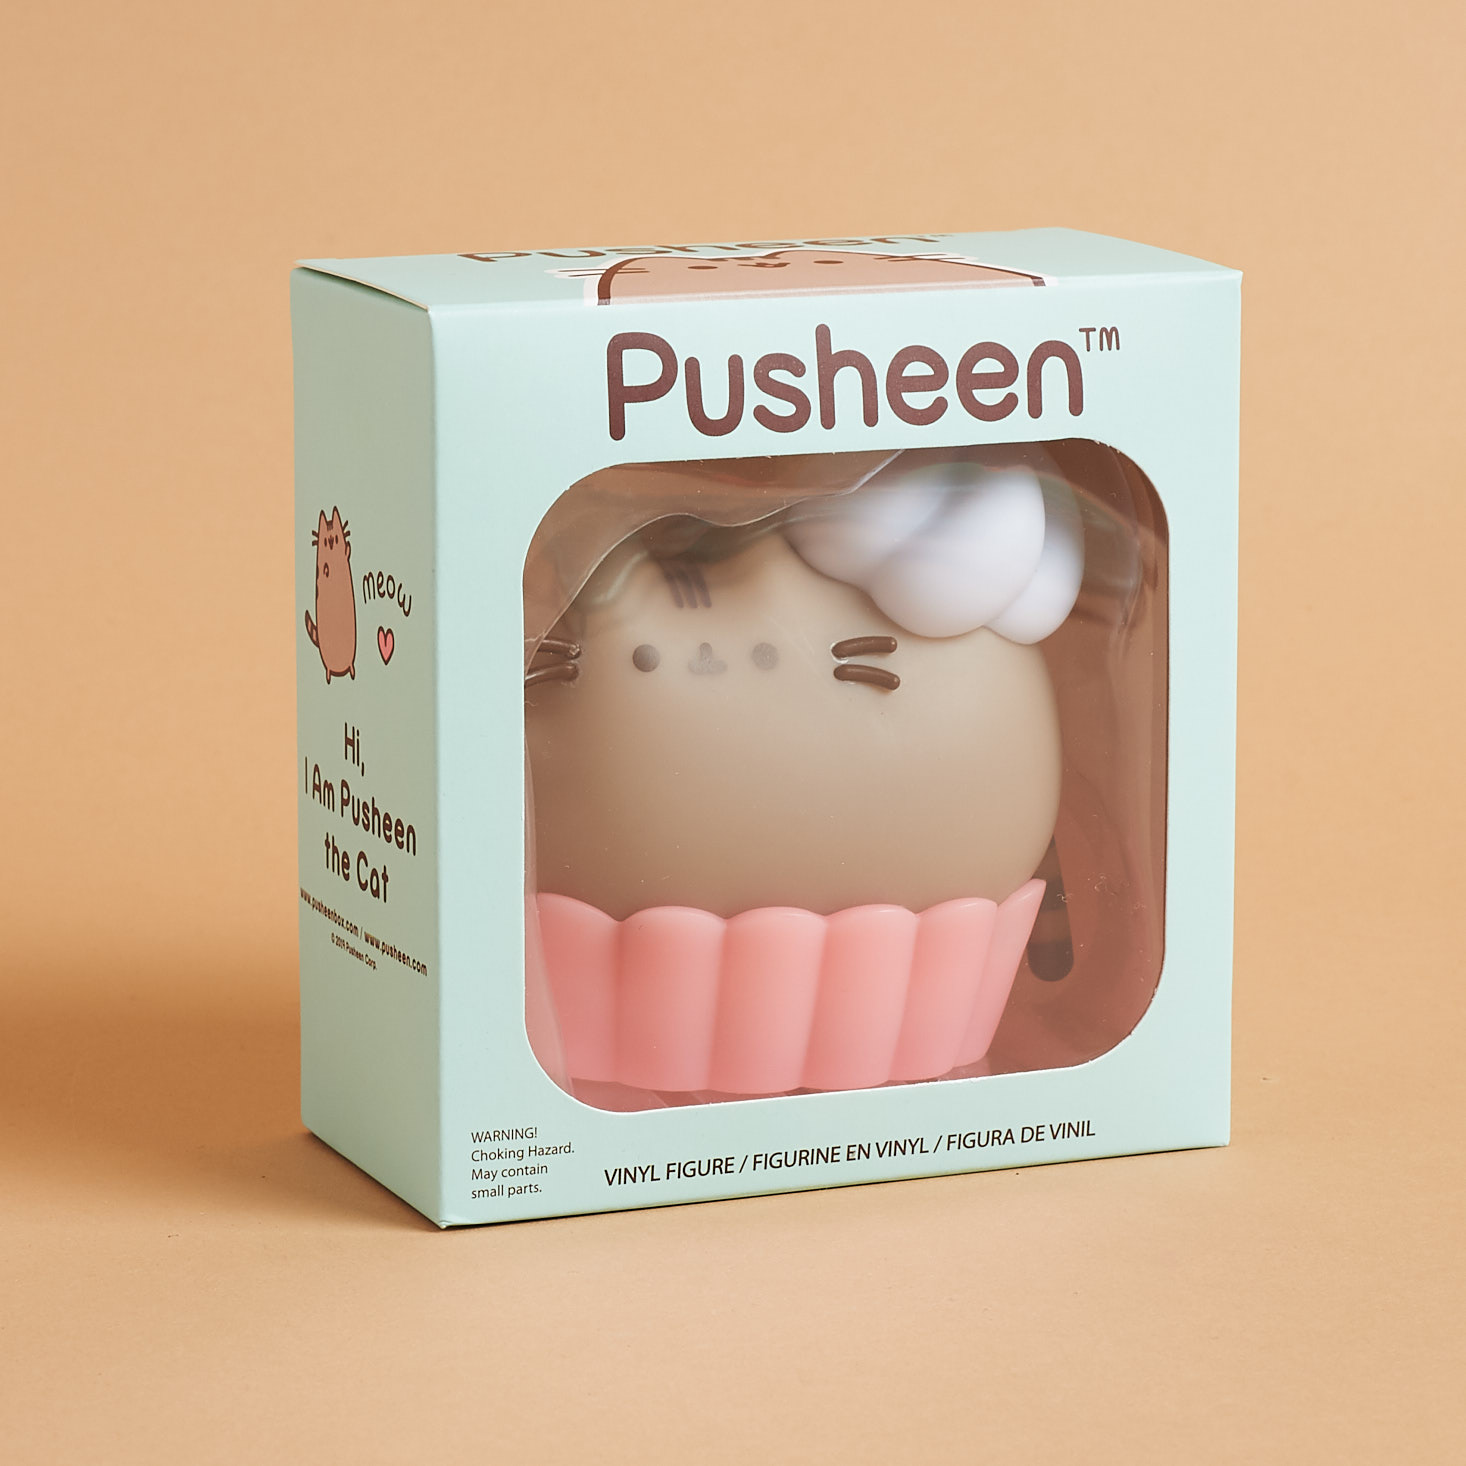 Cupcake Pusheen Vinyl Figure in box